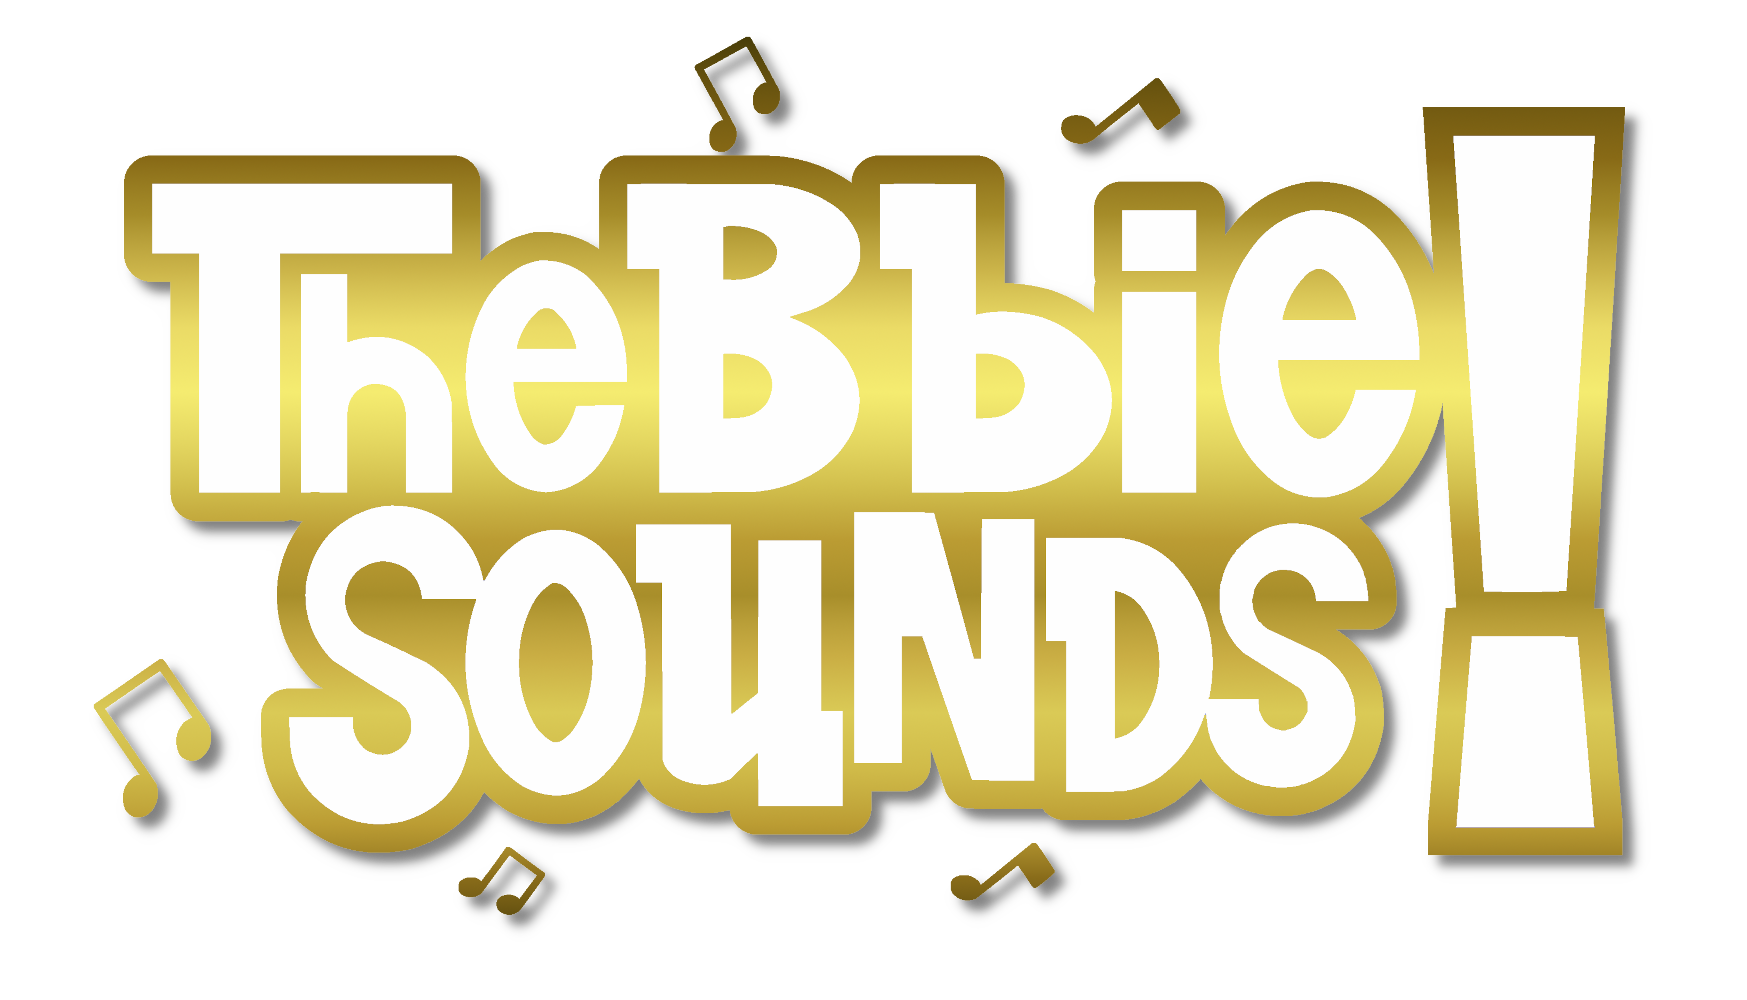 Thebbie Sounds